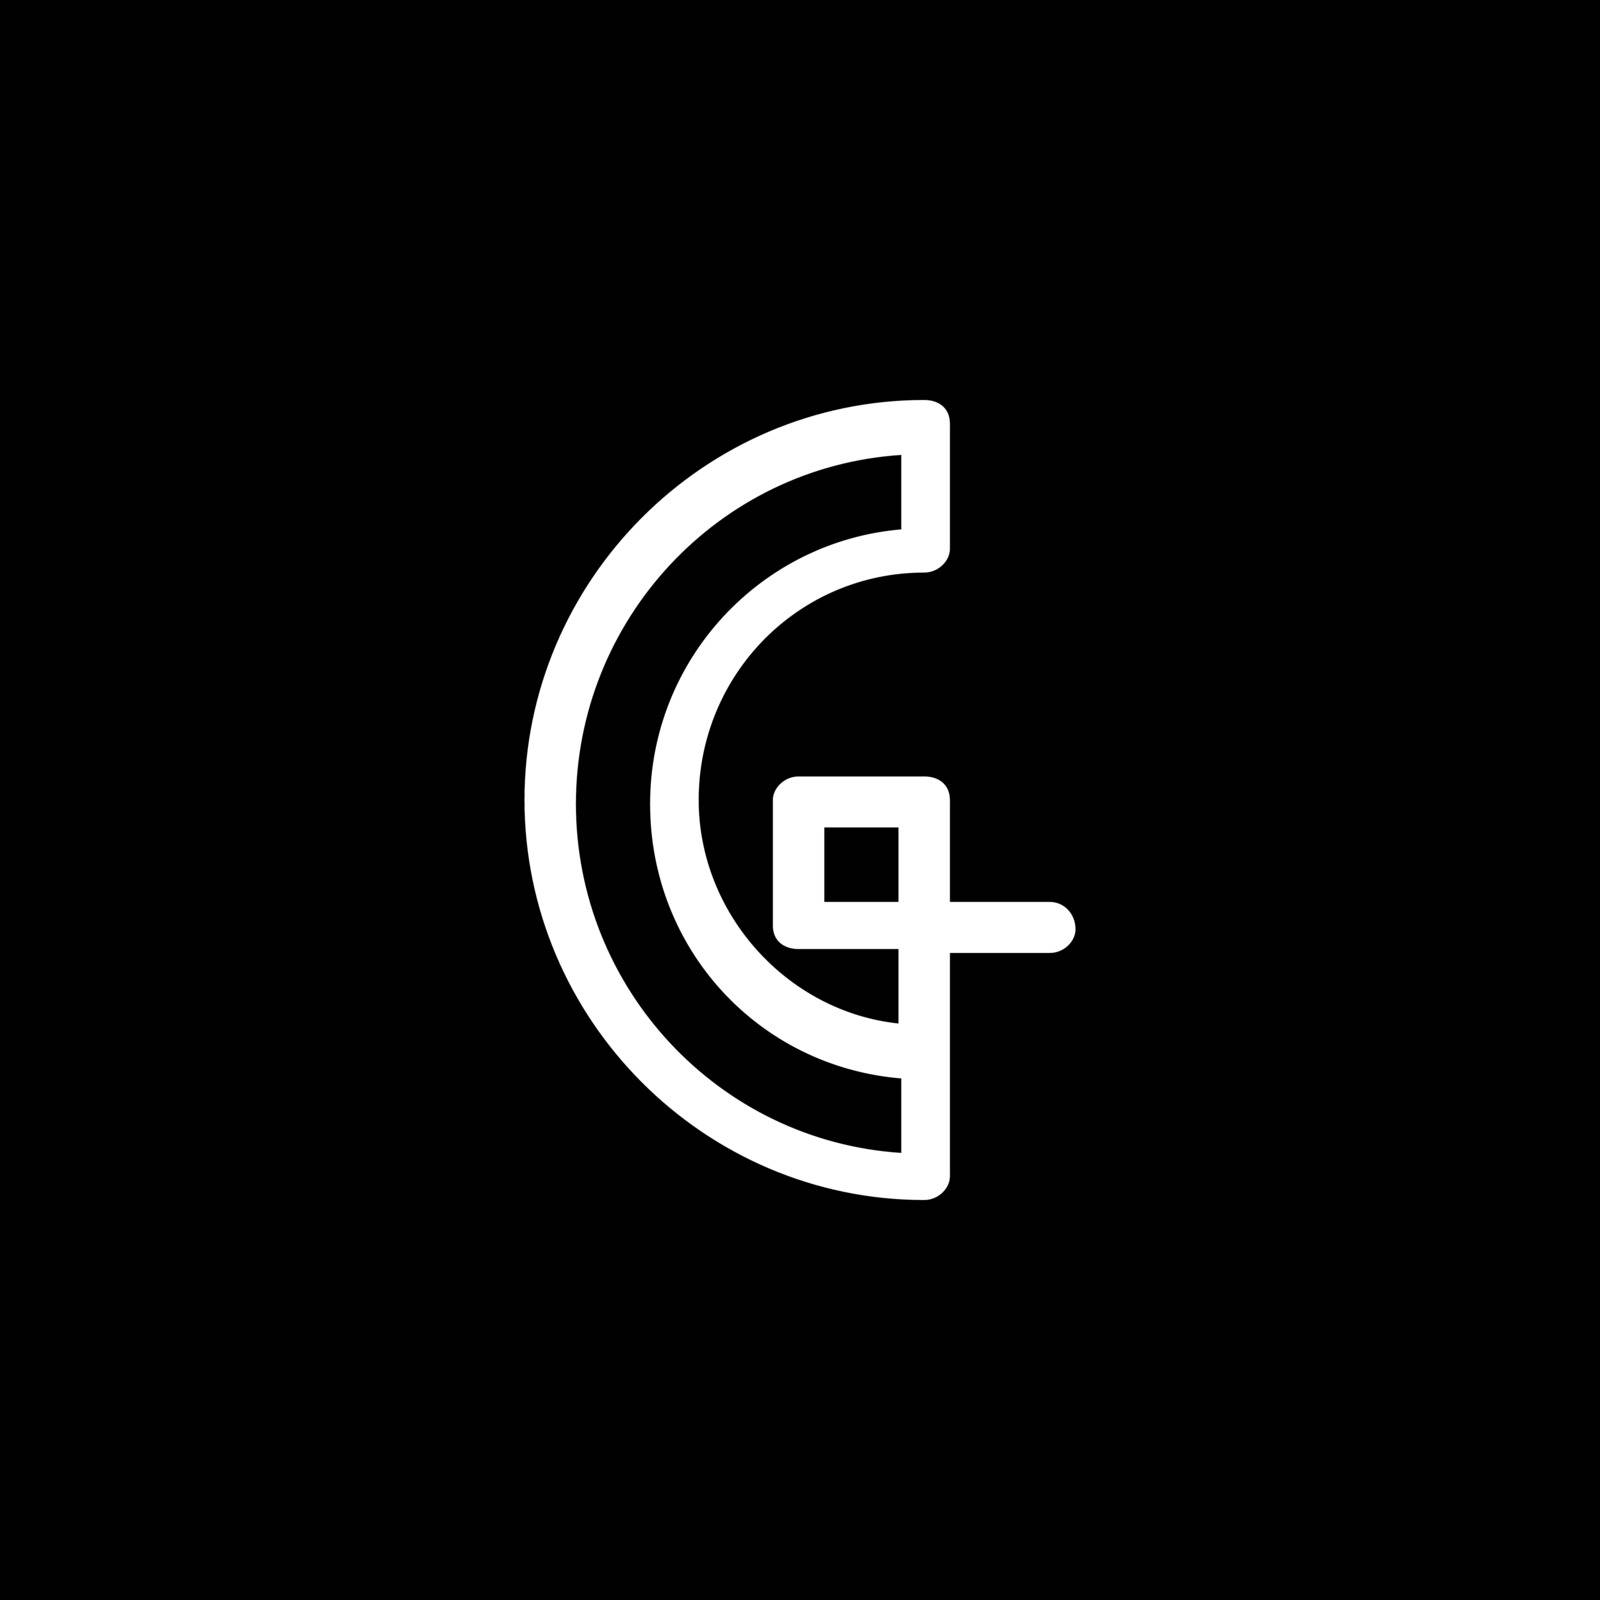 corporate company logo design. letter g logo. flat logo